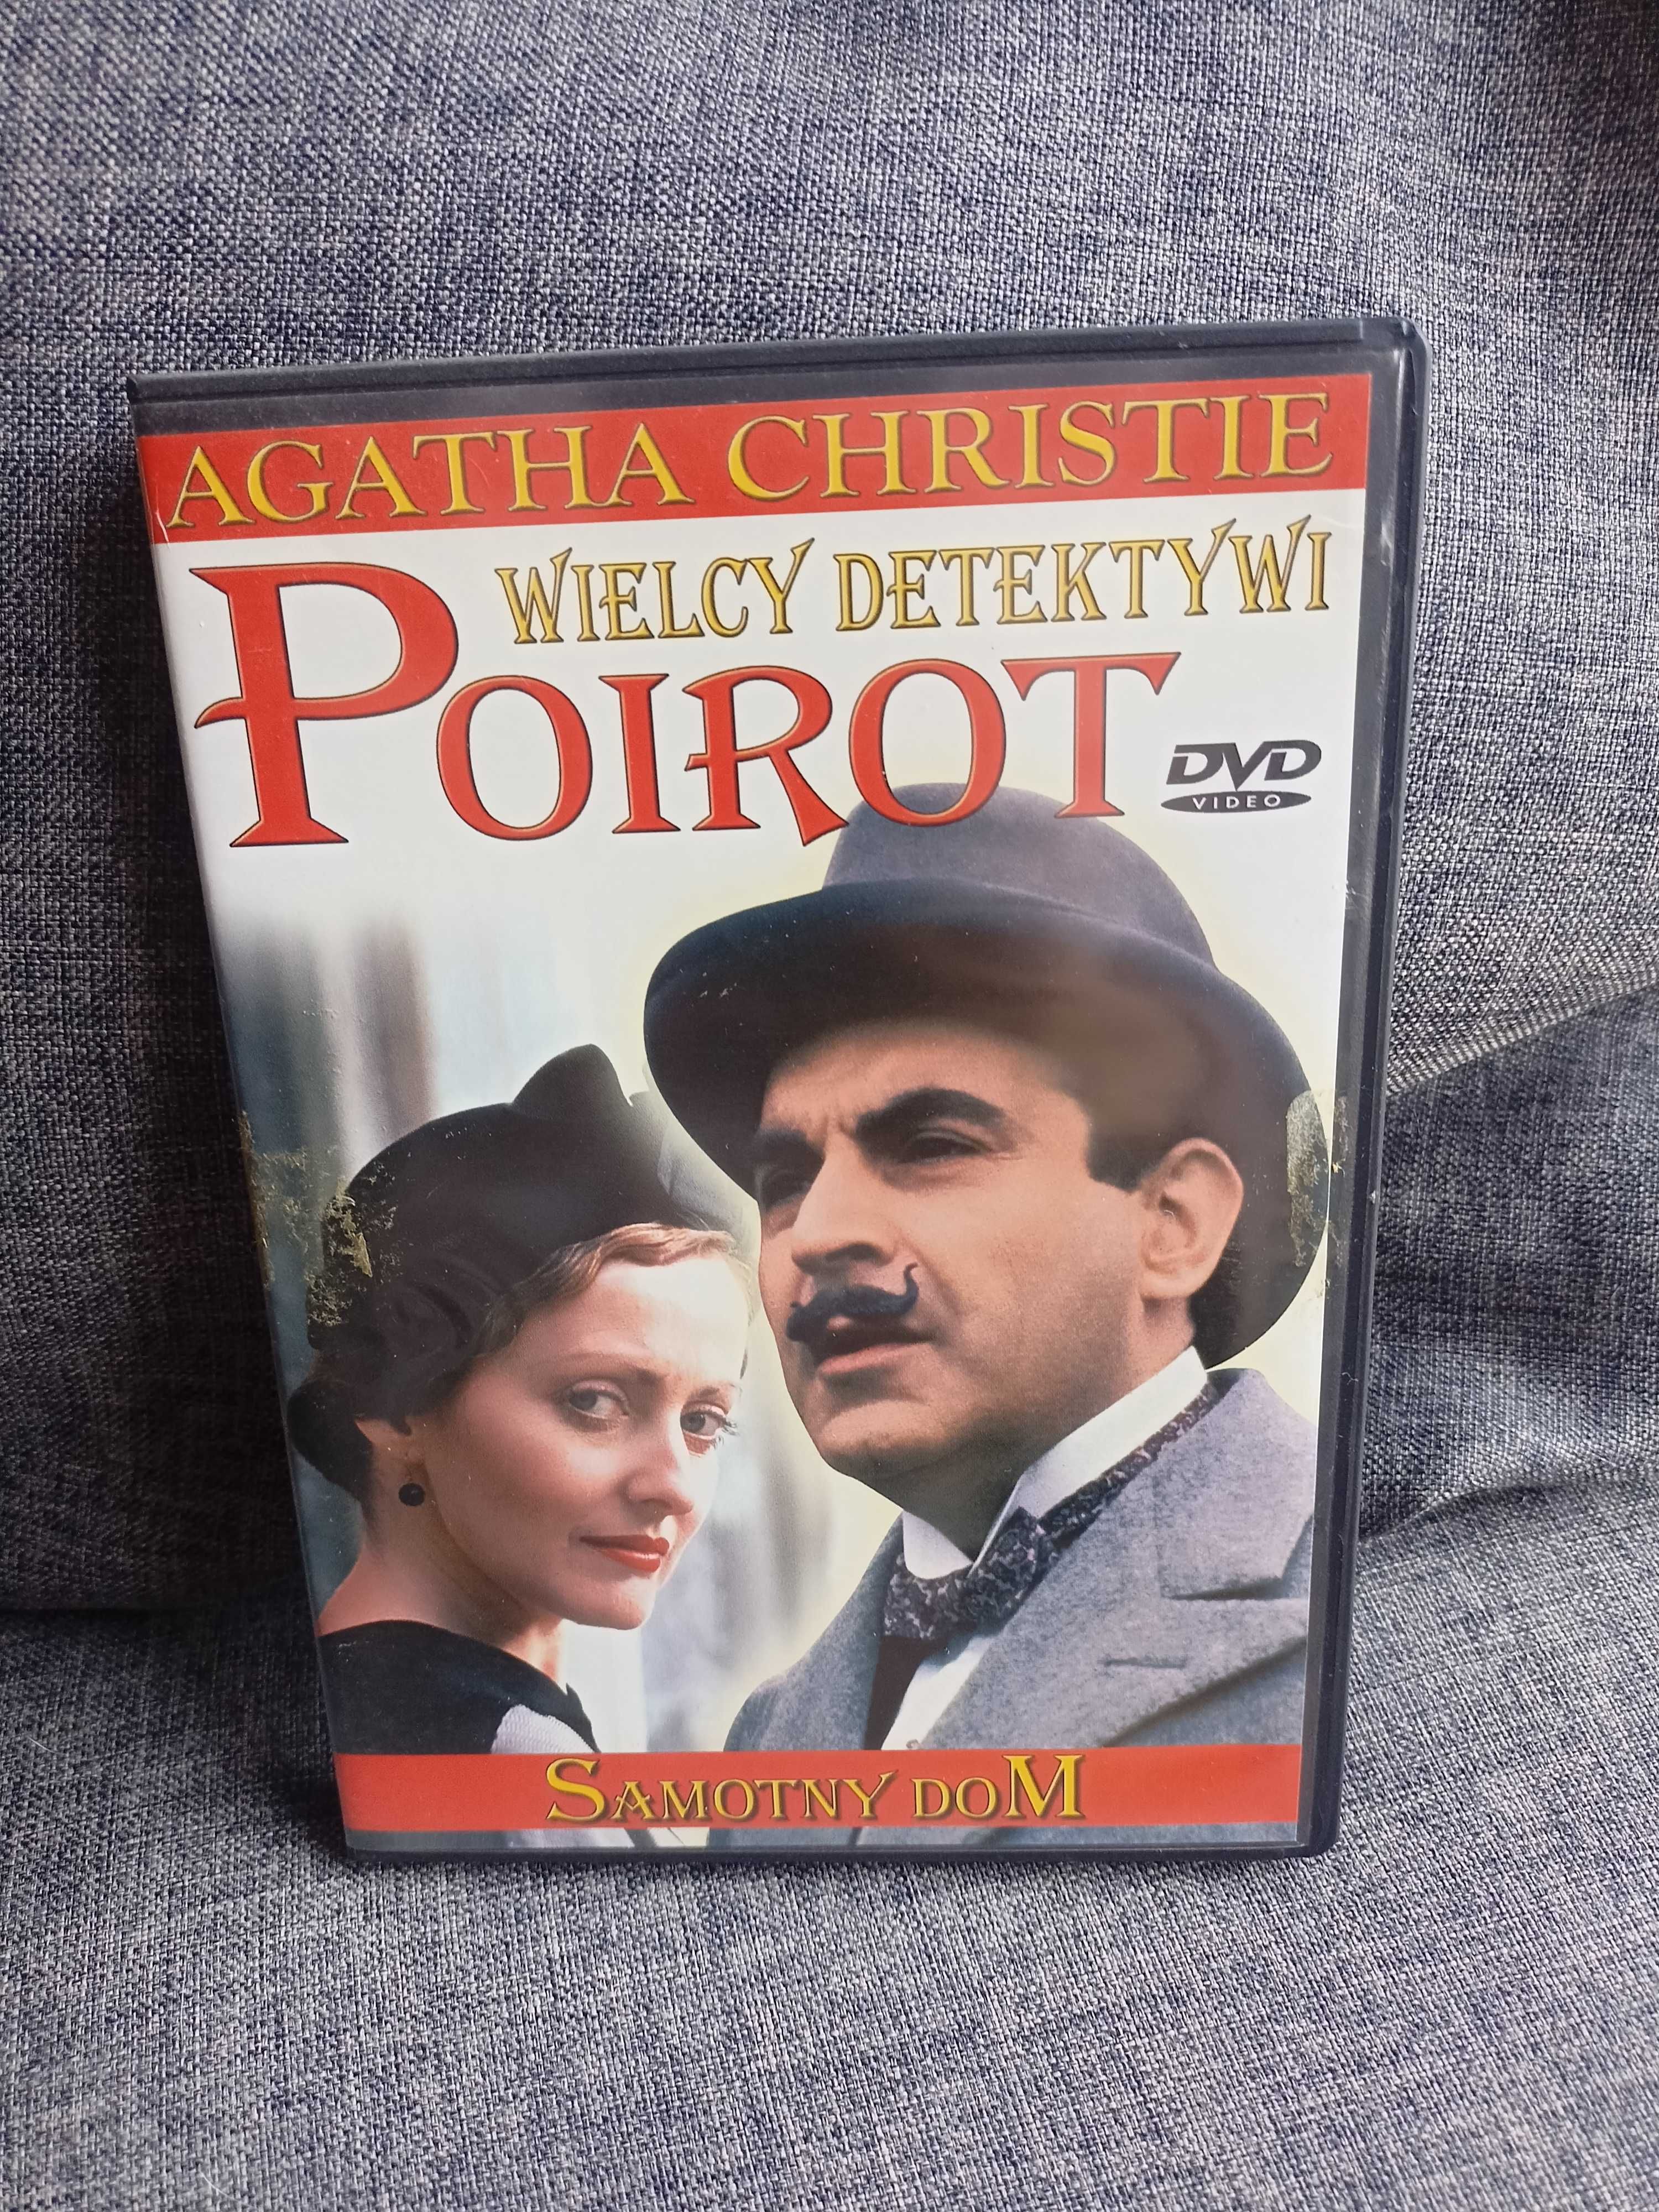 DVD Poirot 7. Samotny dom